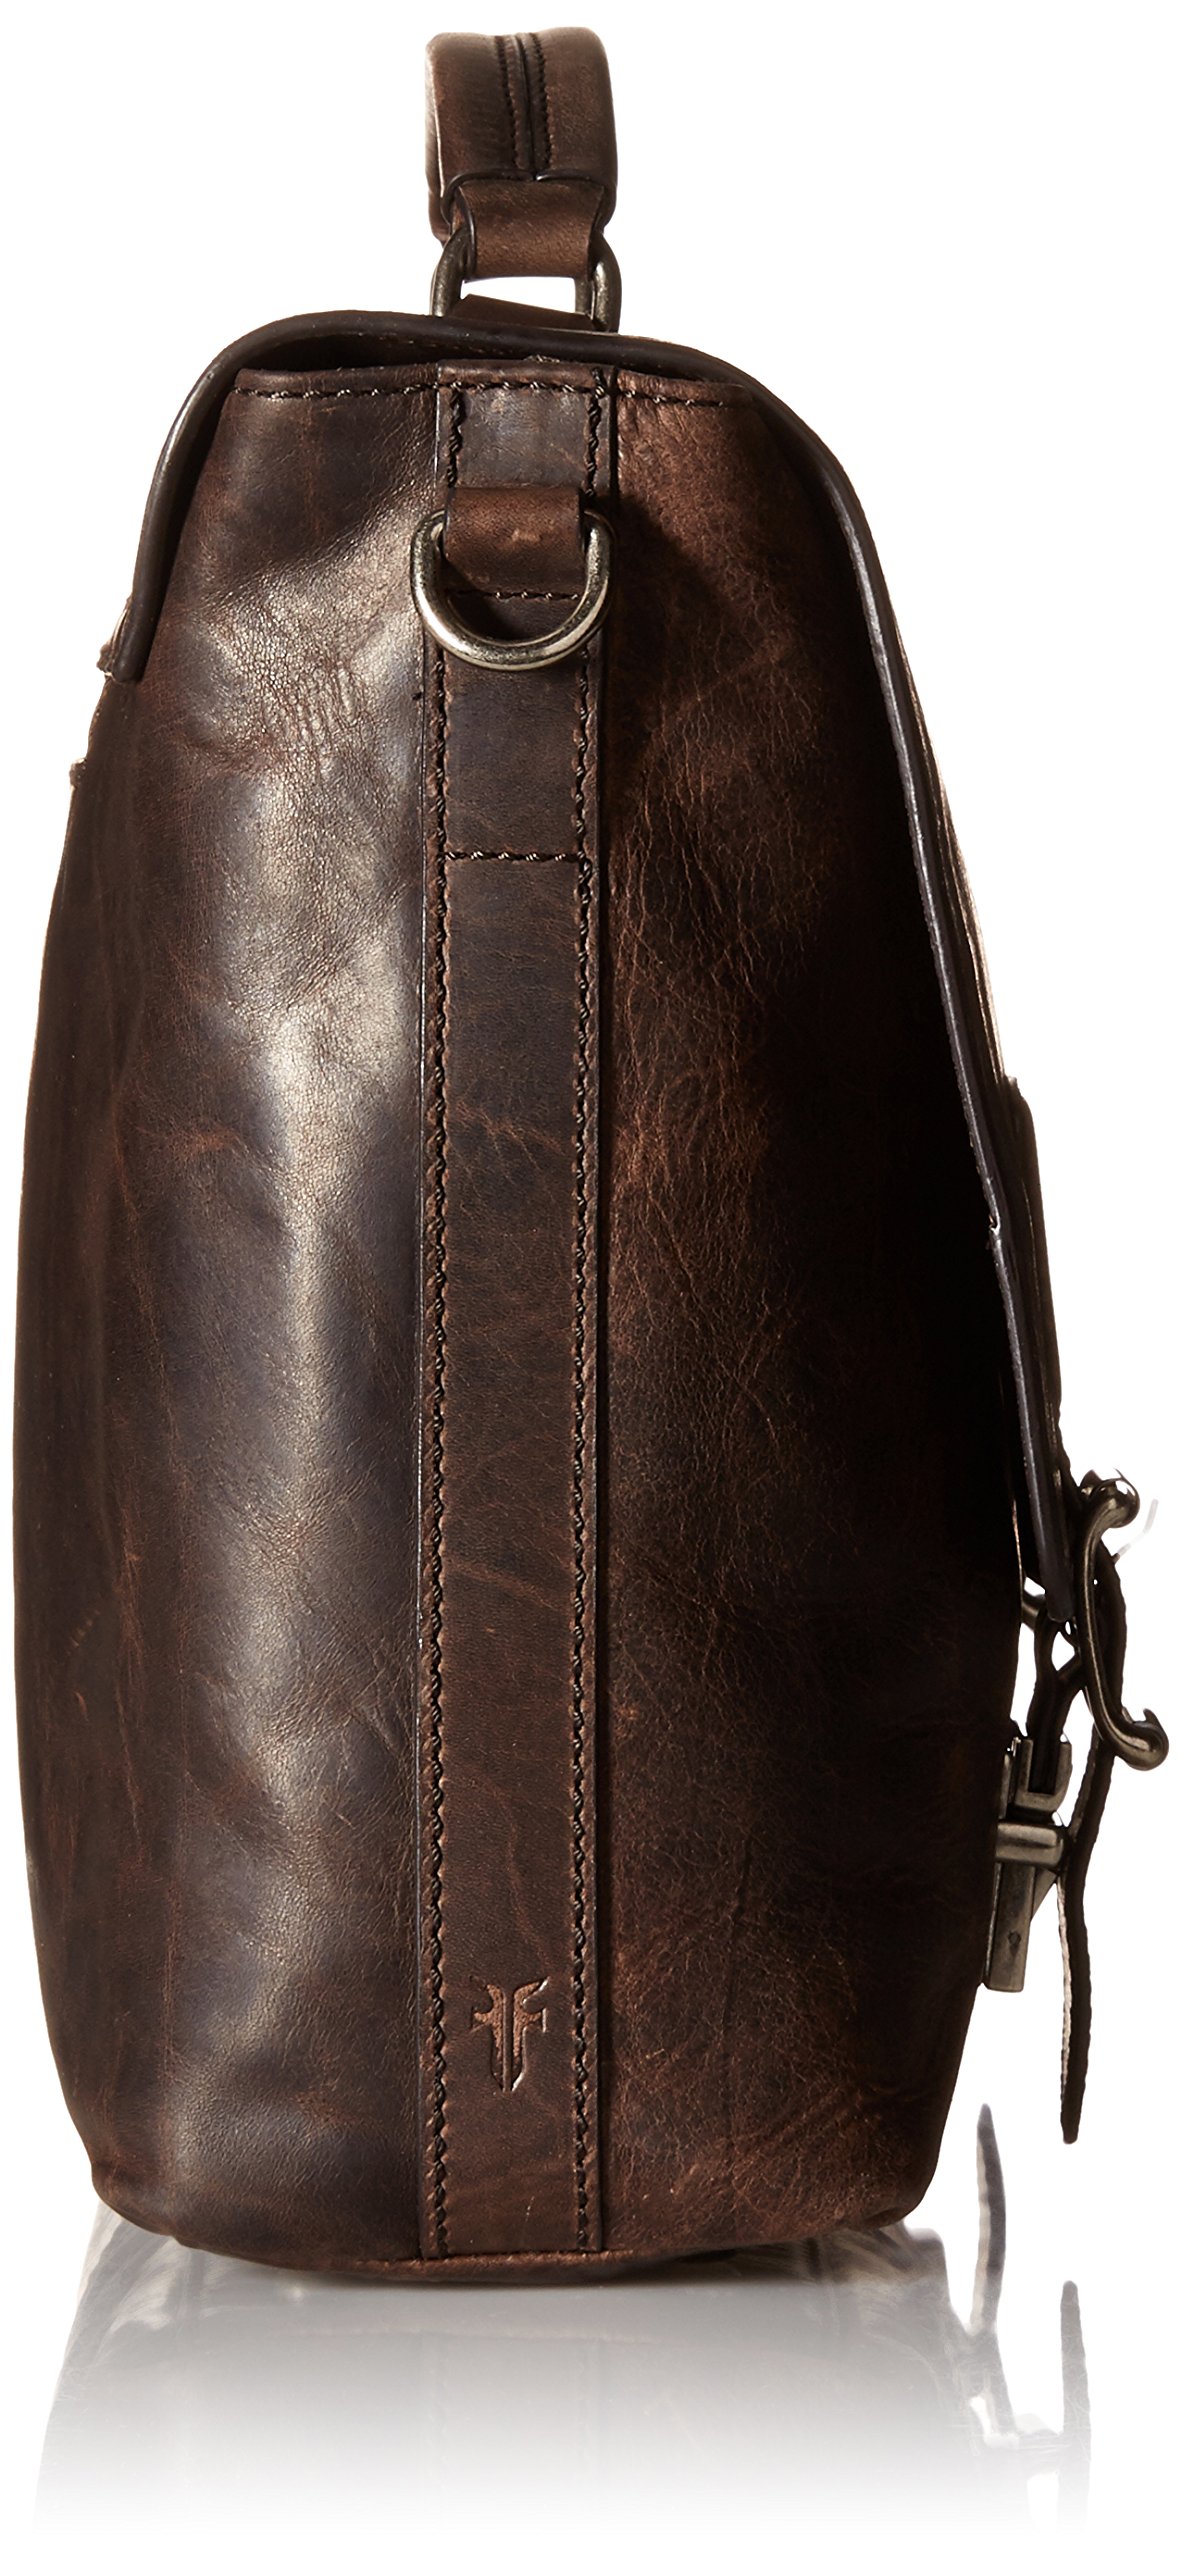 FRYE Men's Logan Top Handle Messenger Bag, Slate, One Size